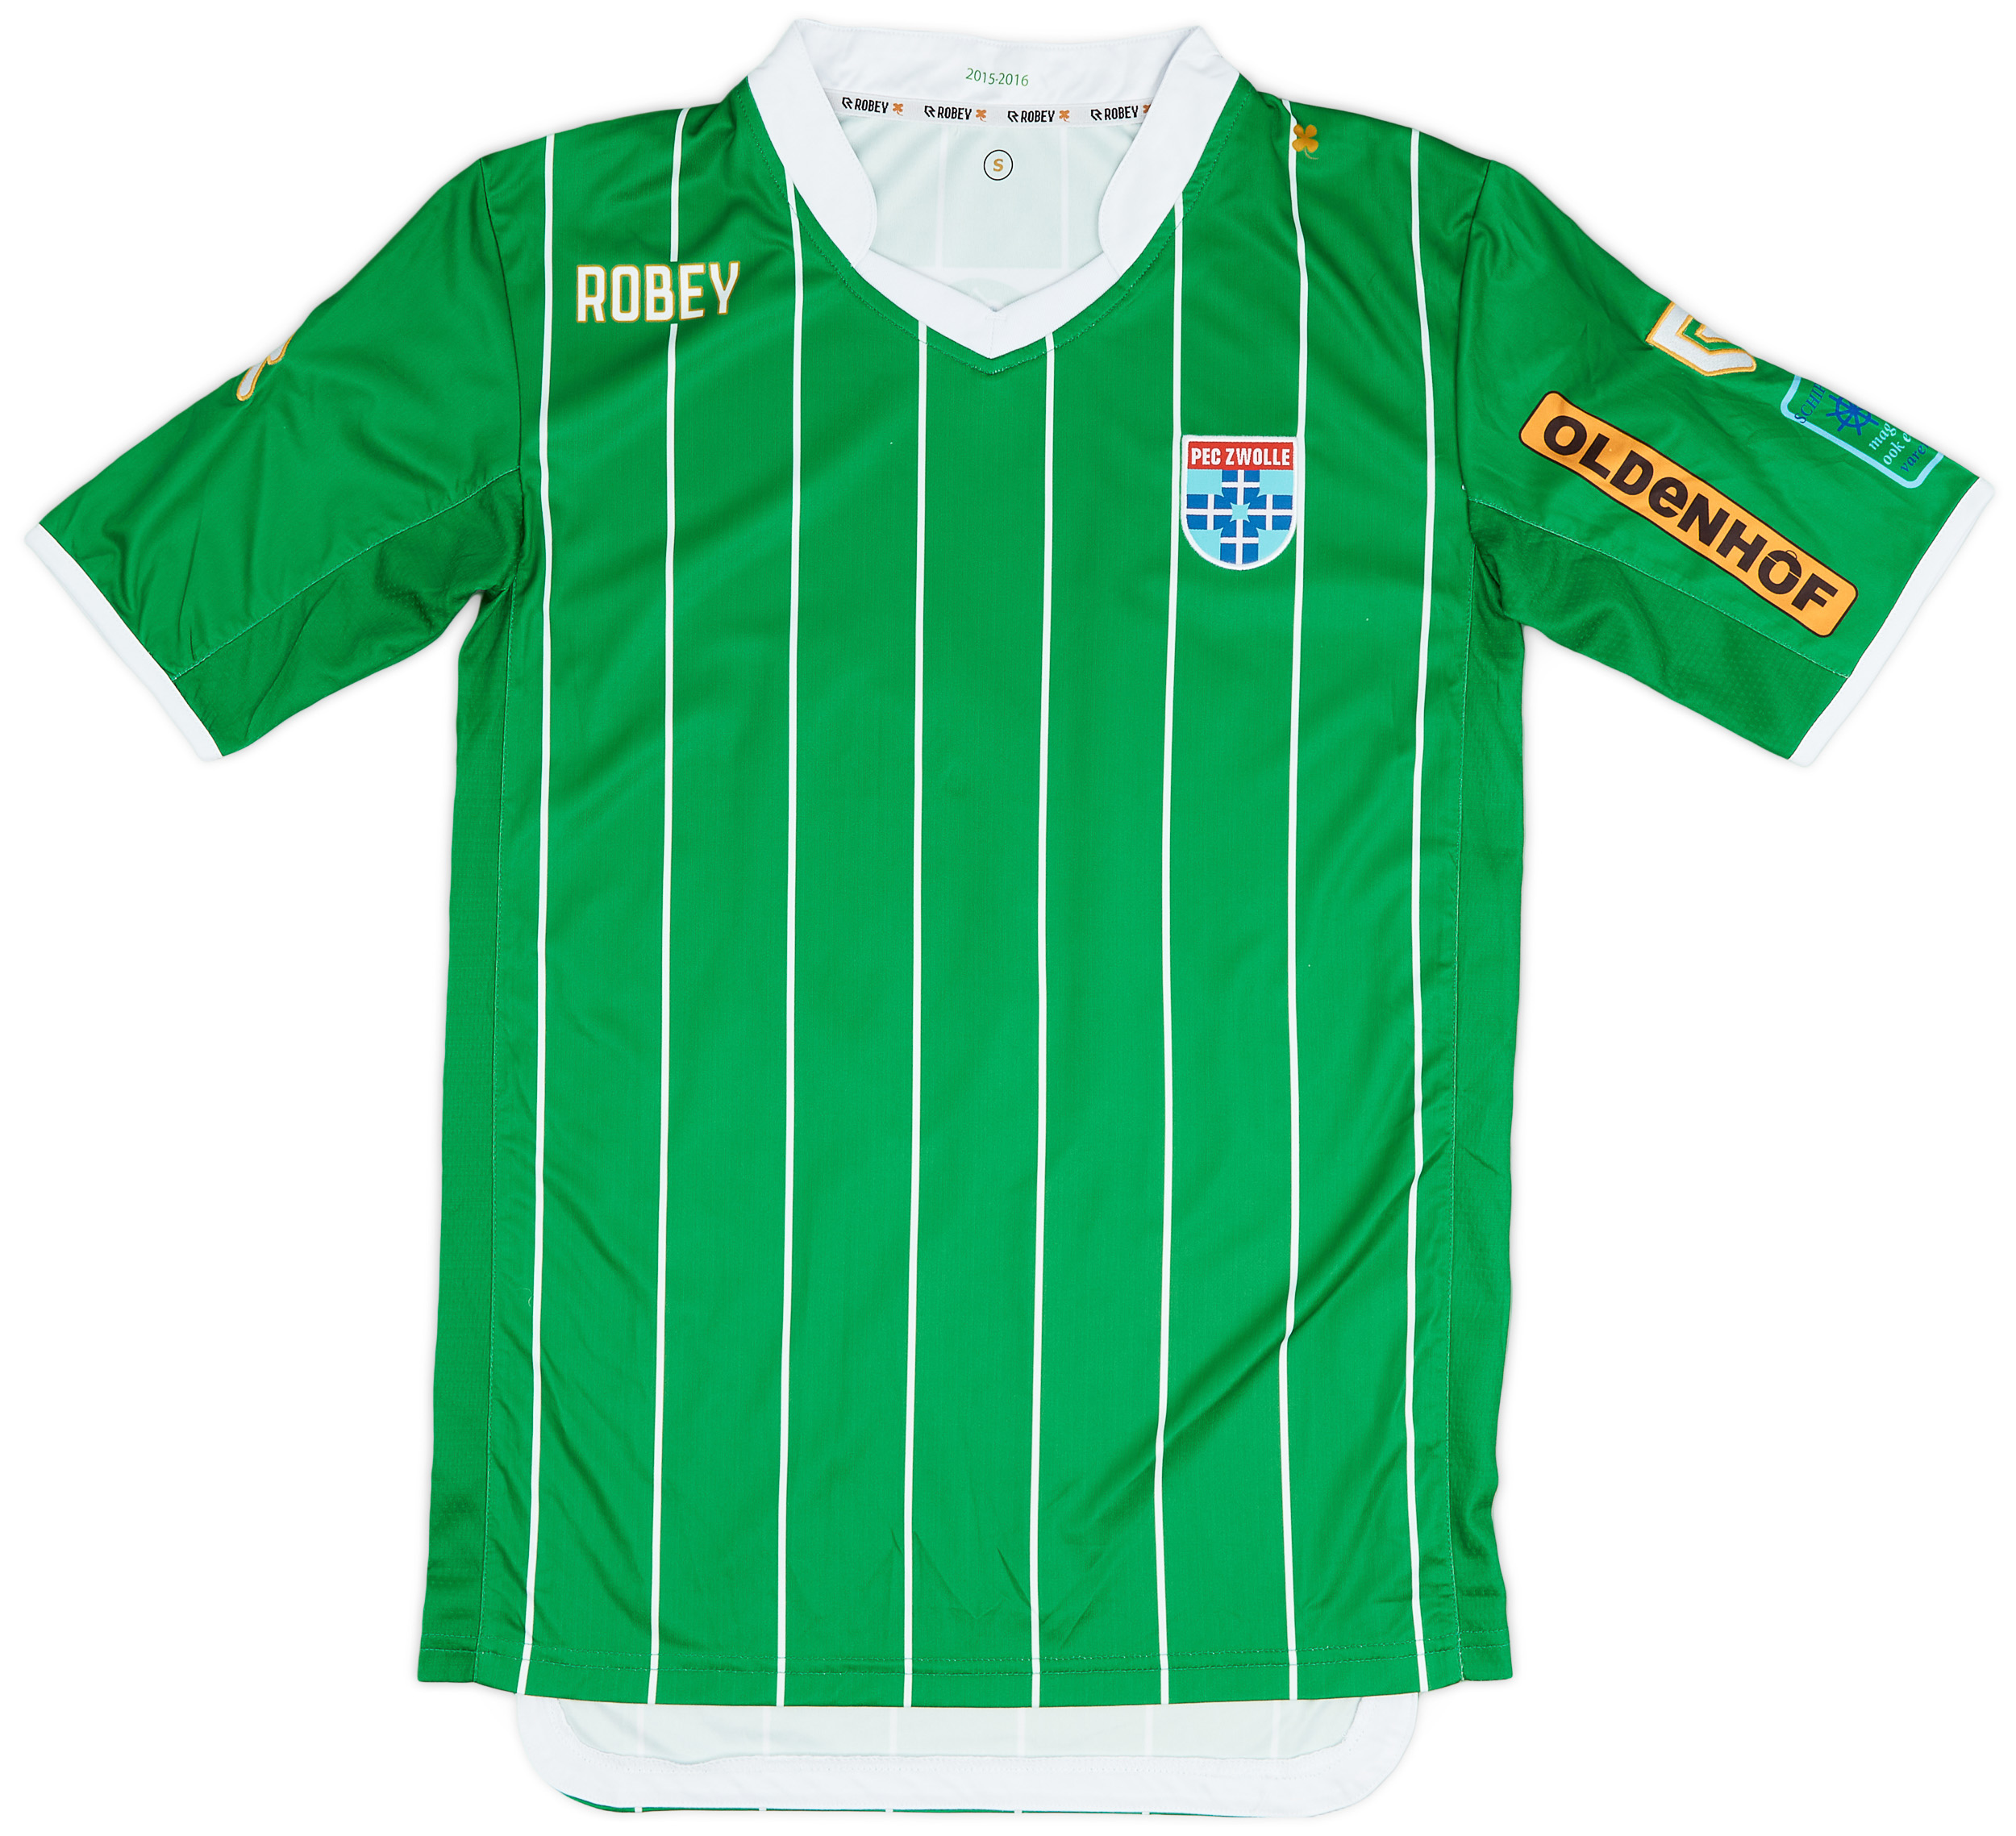 Zwolle  Fora camisa (Original)